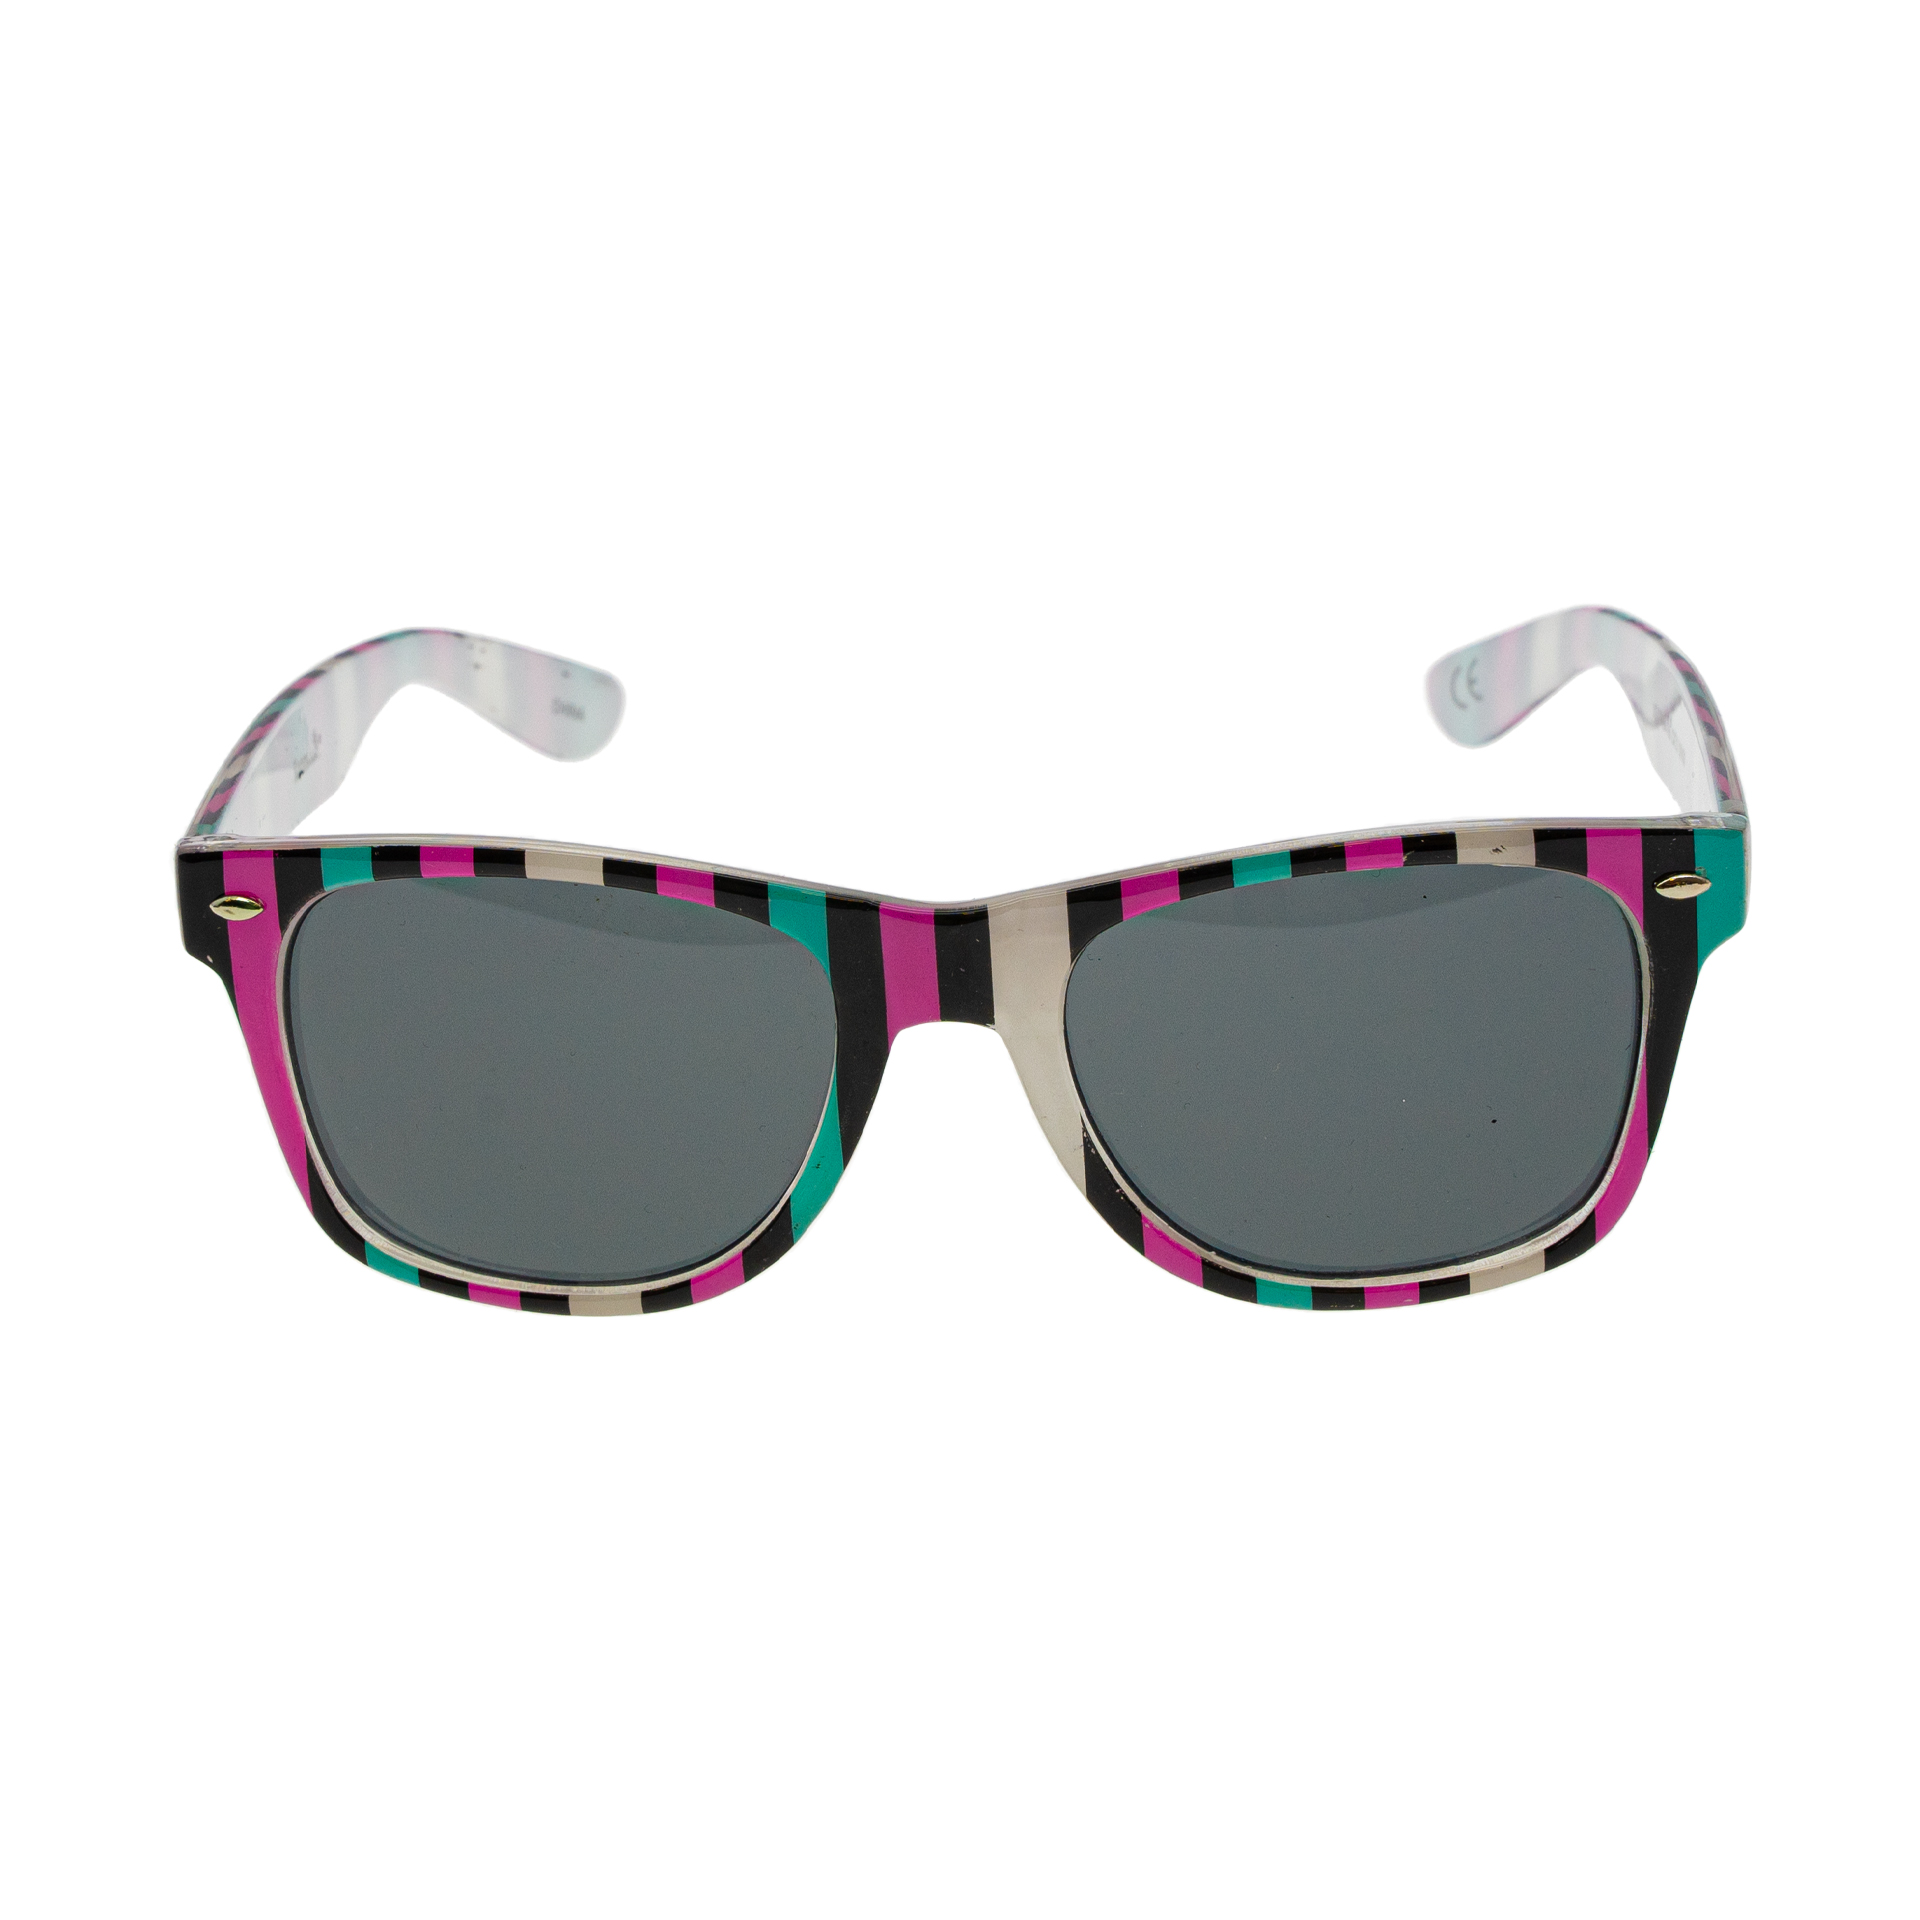 Xoomvision P124785 Women's Sunglasses, UV 400 Protection, 2 Year Warranty, PVC Box